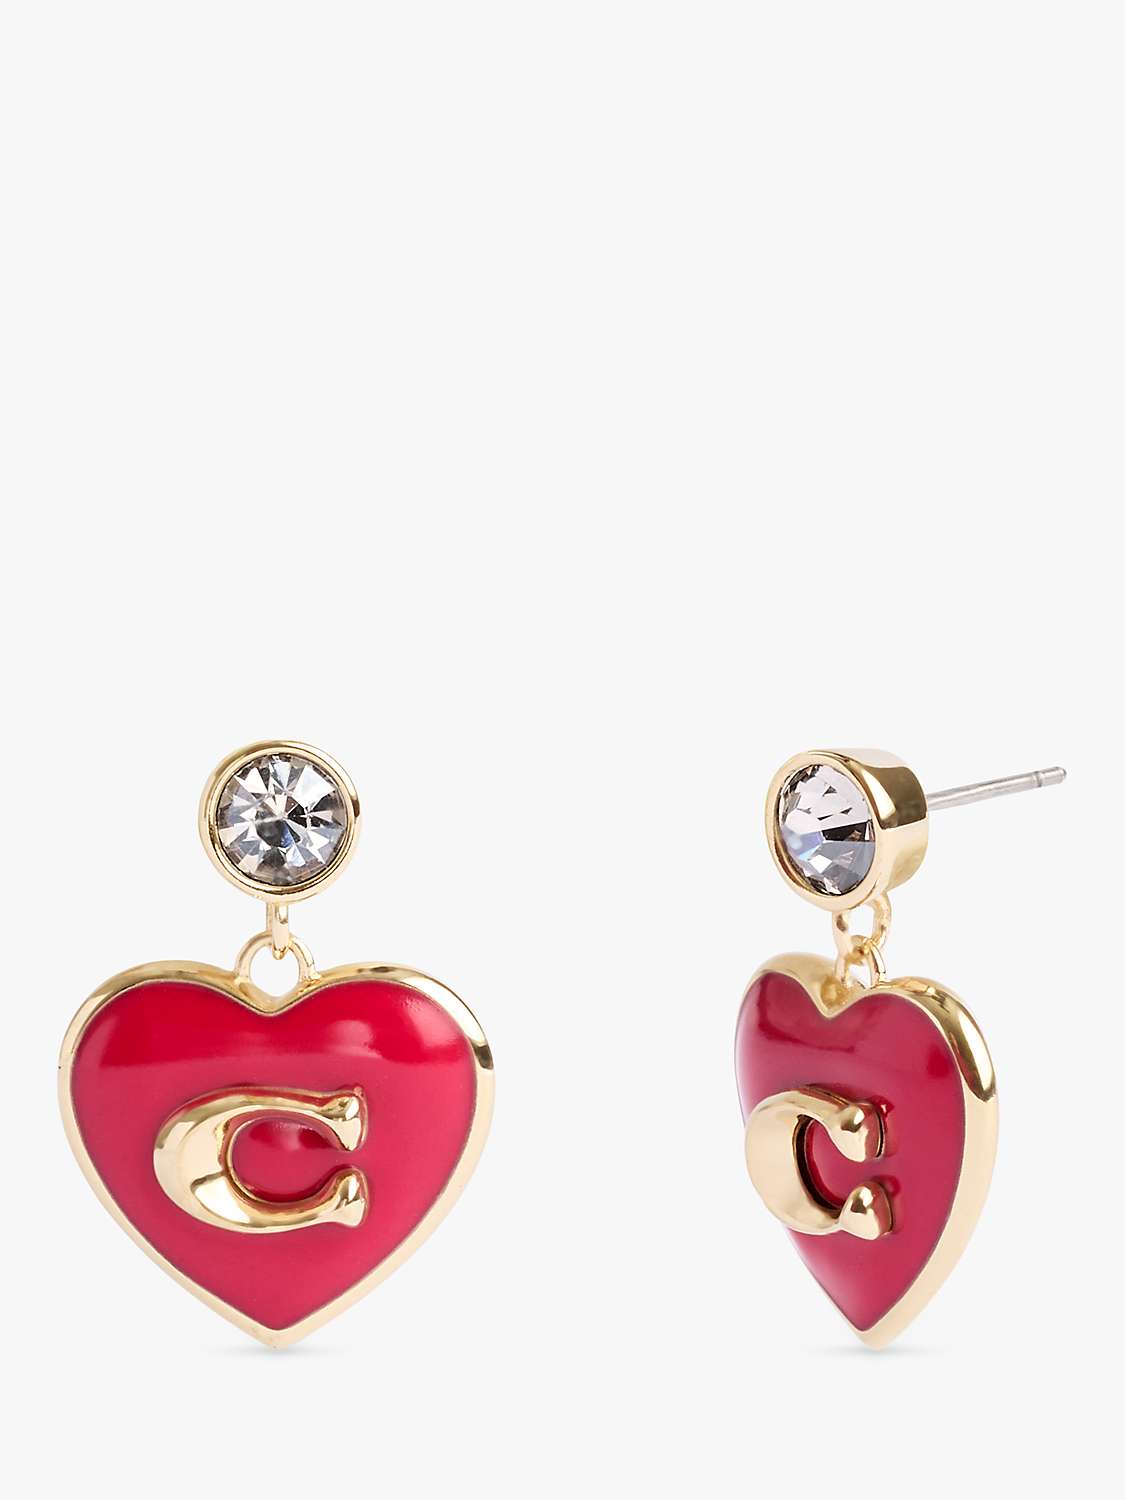 Buy Coach Enamel and Crystal Heart Drop Earrings Online at johnlewis.com